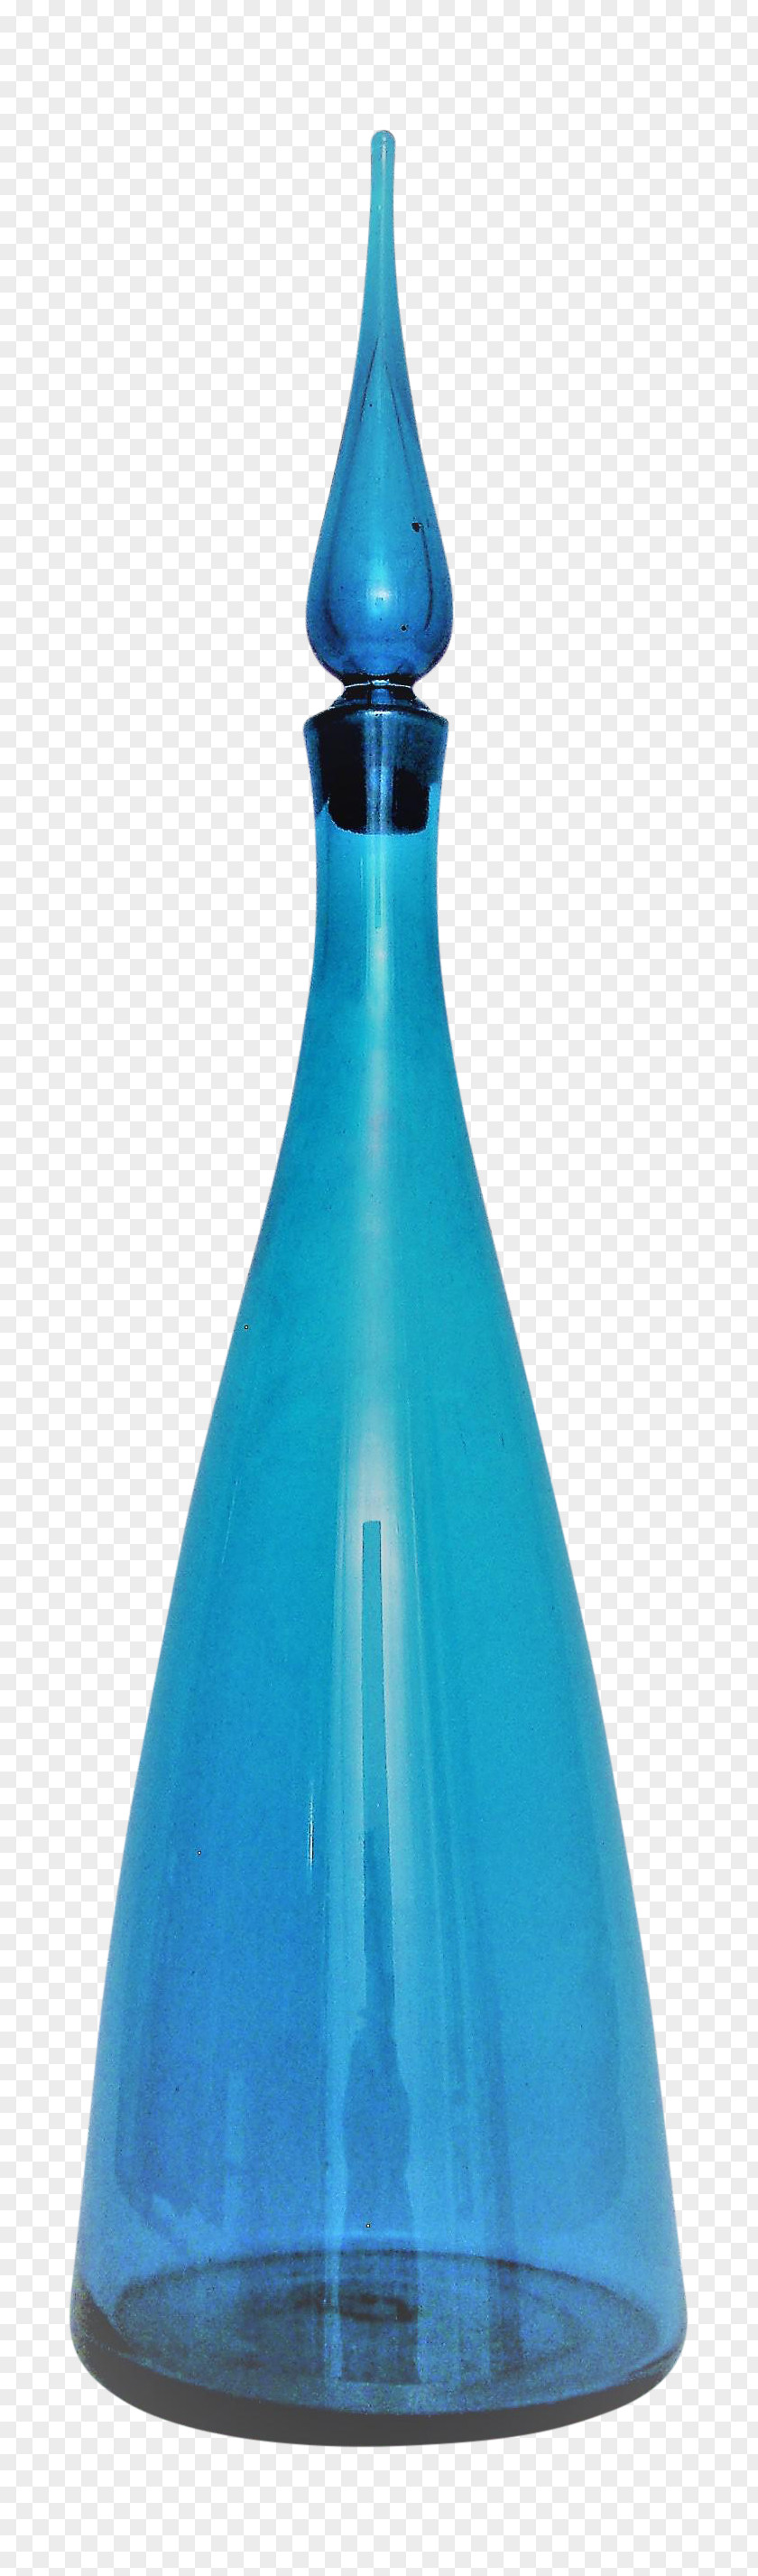 Stopper Blenko Glass Company, Inc. Bottle Decanter Cobalt Blue PNG